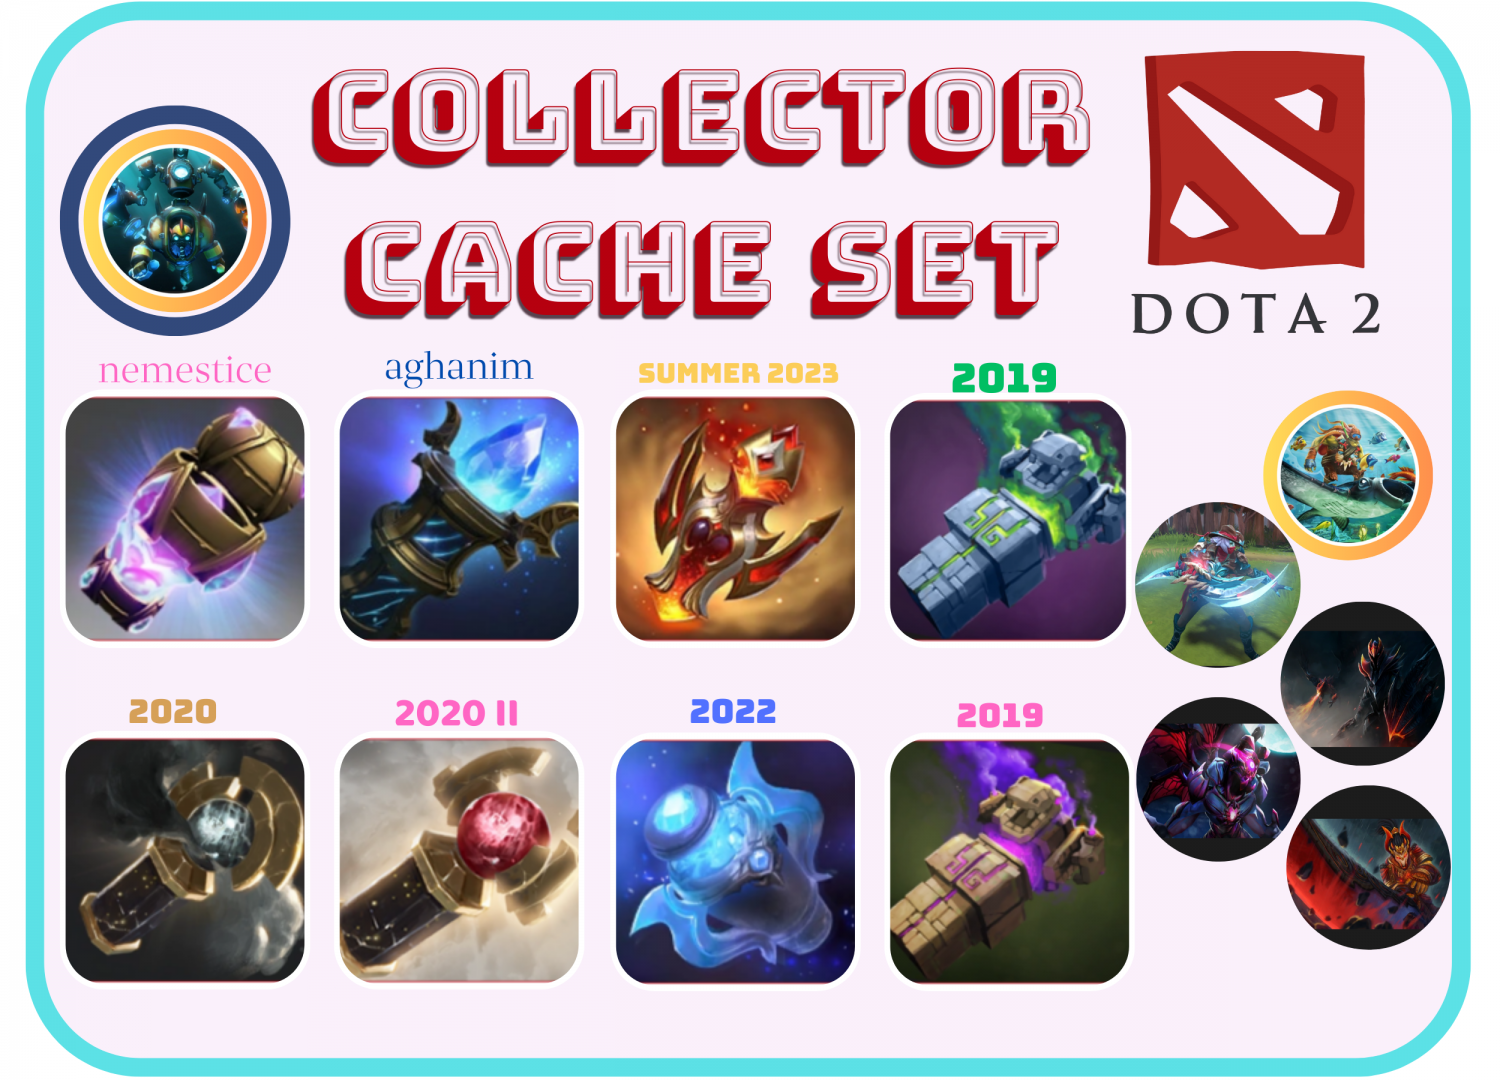 Collector ‘s Cache Dota 2